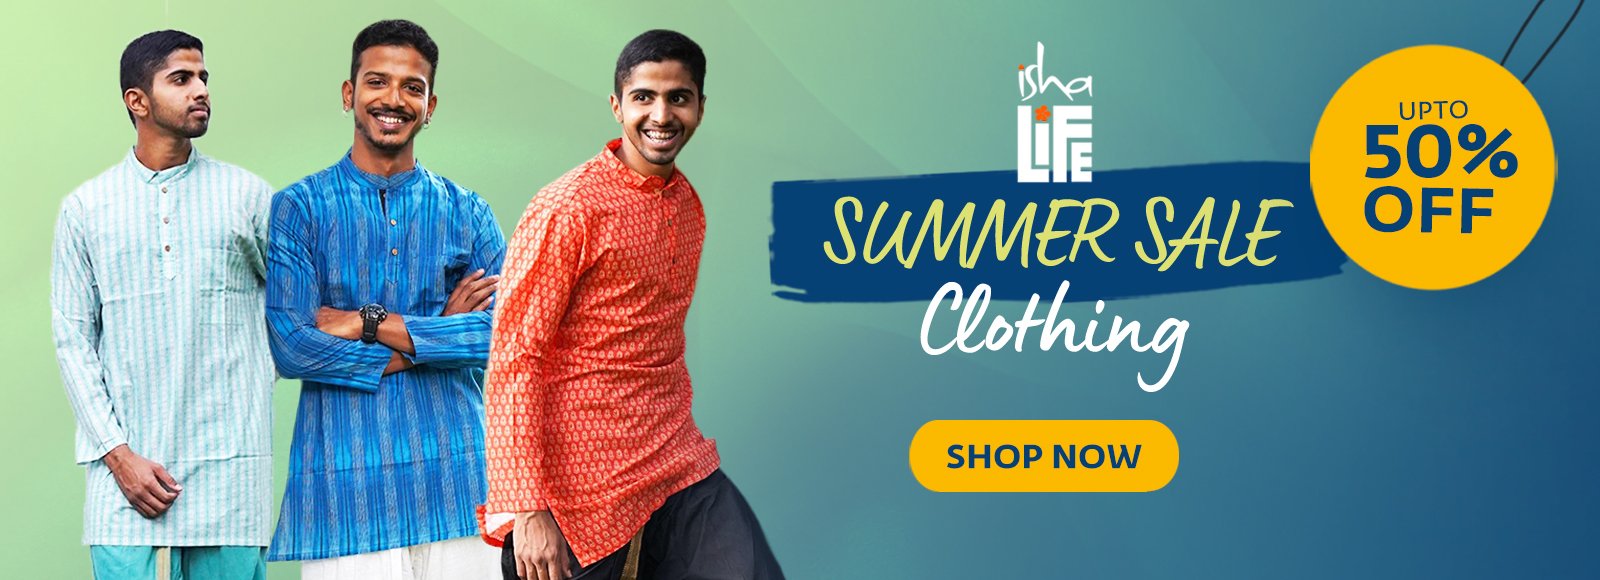 om/homeslider/s/u/summer-sale-clothing-web.jpg